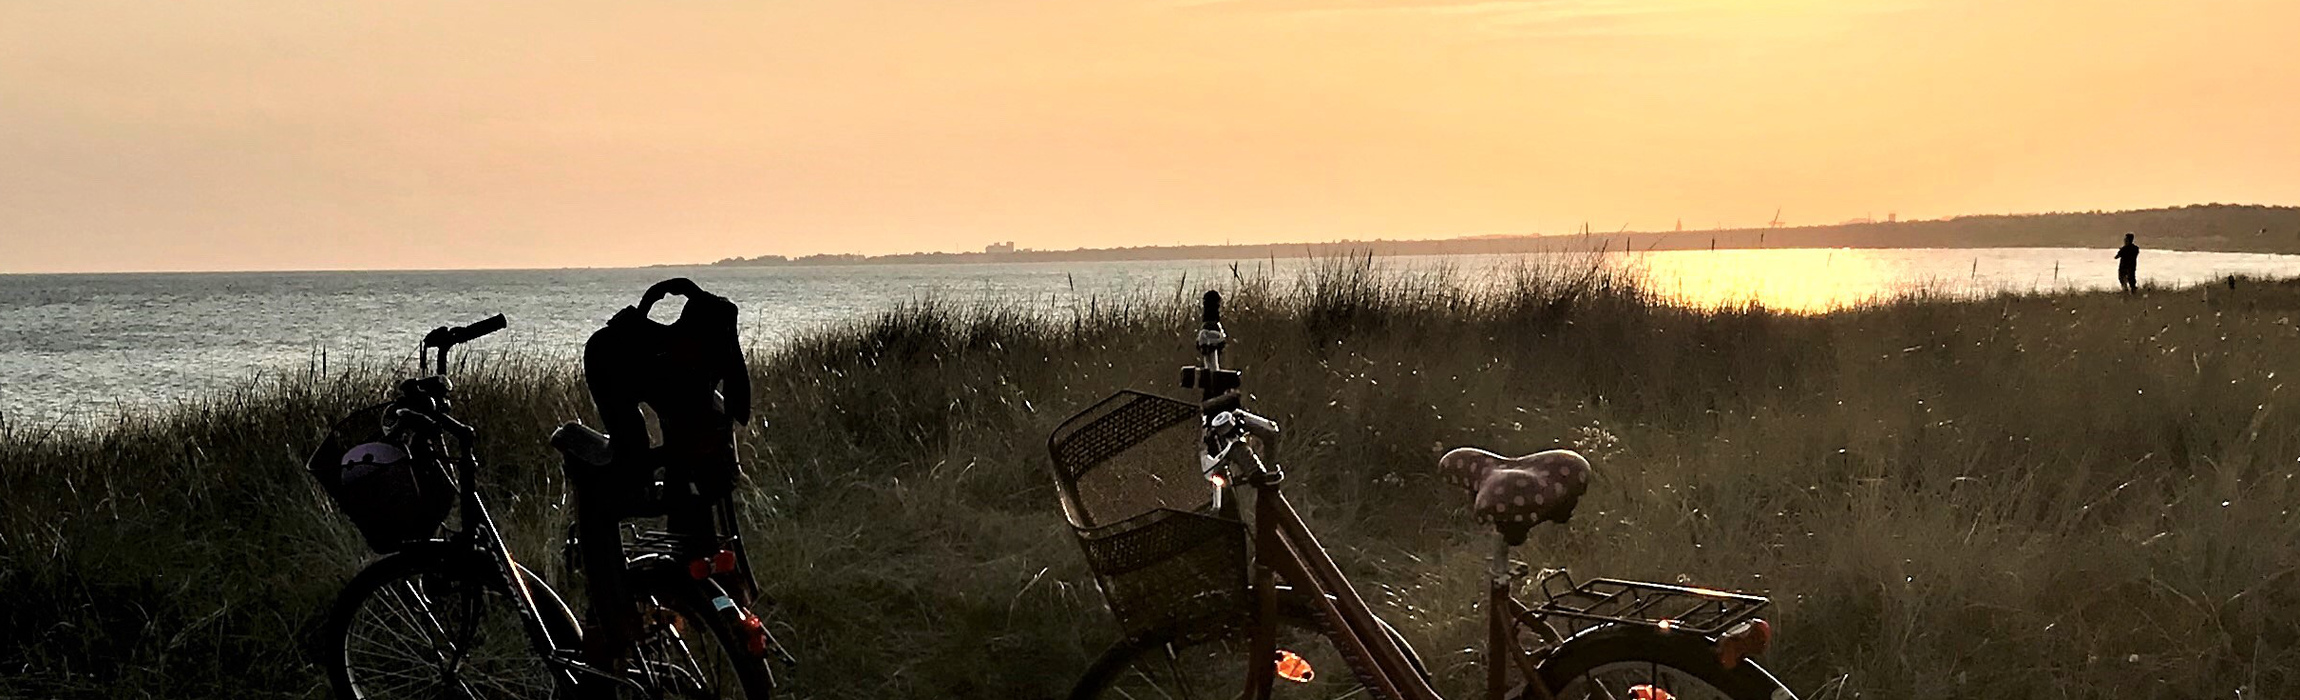 cyklar_solnedgang_vid_strand.jpg